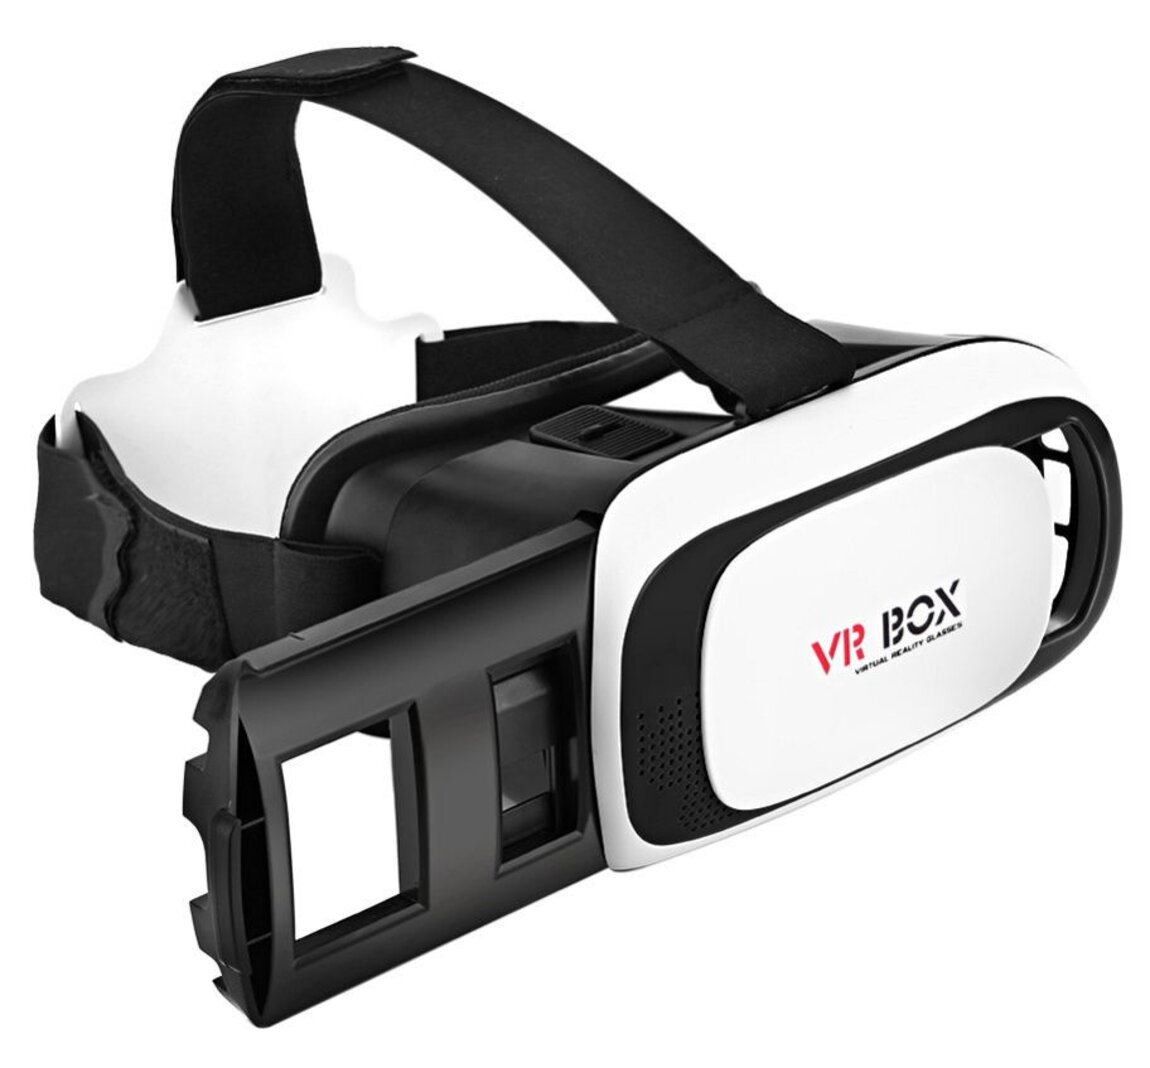 Vr очки шлемы. Очки виртуальной реальности VR Box 3d (Black/White). Очки VR Box 2. Очки виртуальной реальности VR-Box 2.0 с пультом. VR Box VR 1.0.